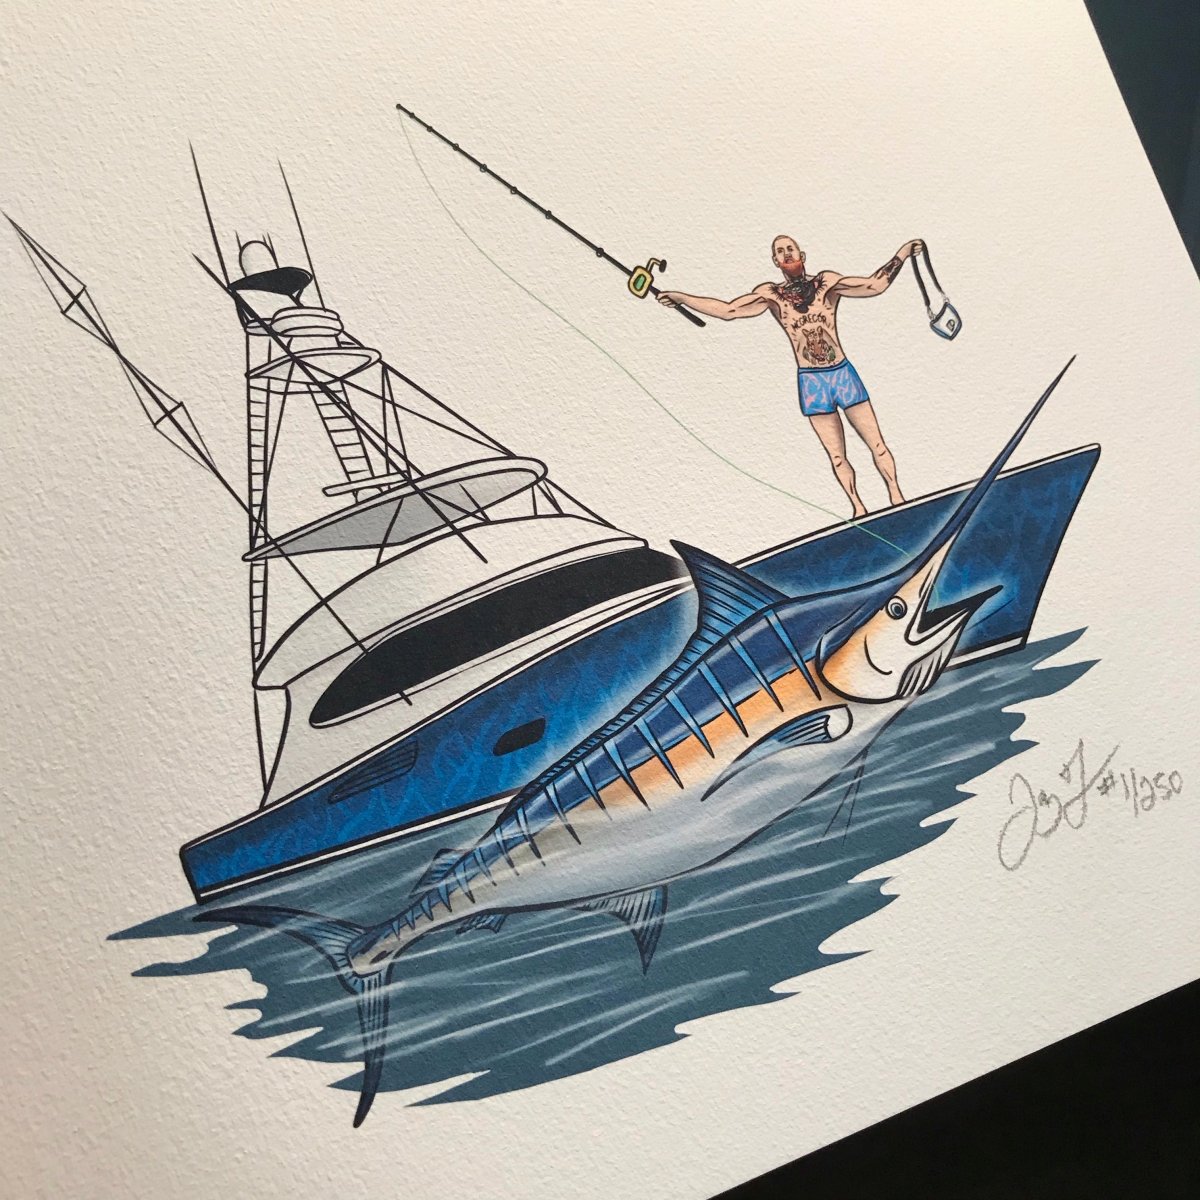 Conor Mcgregor “I am fishing” Print - Jaybo Art